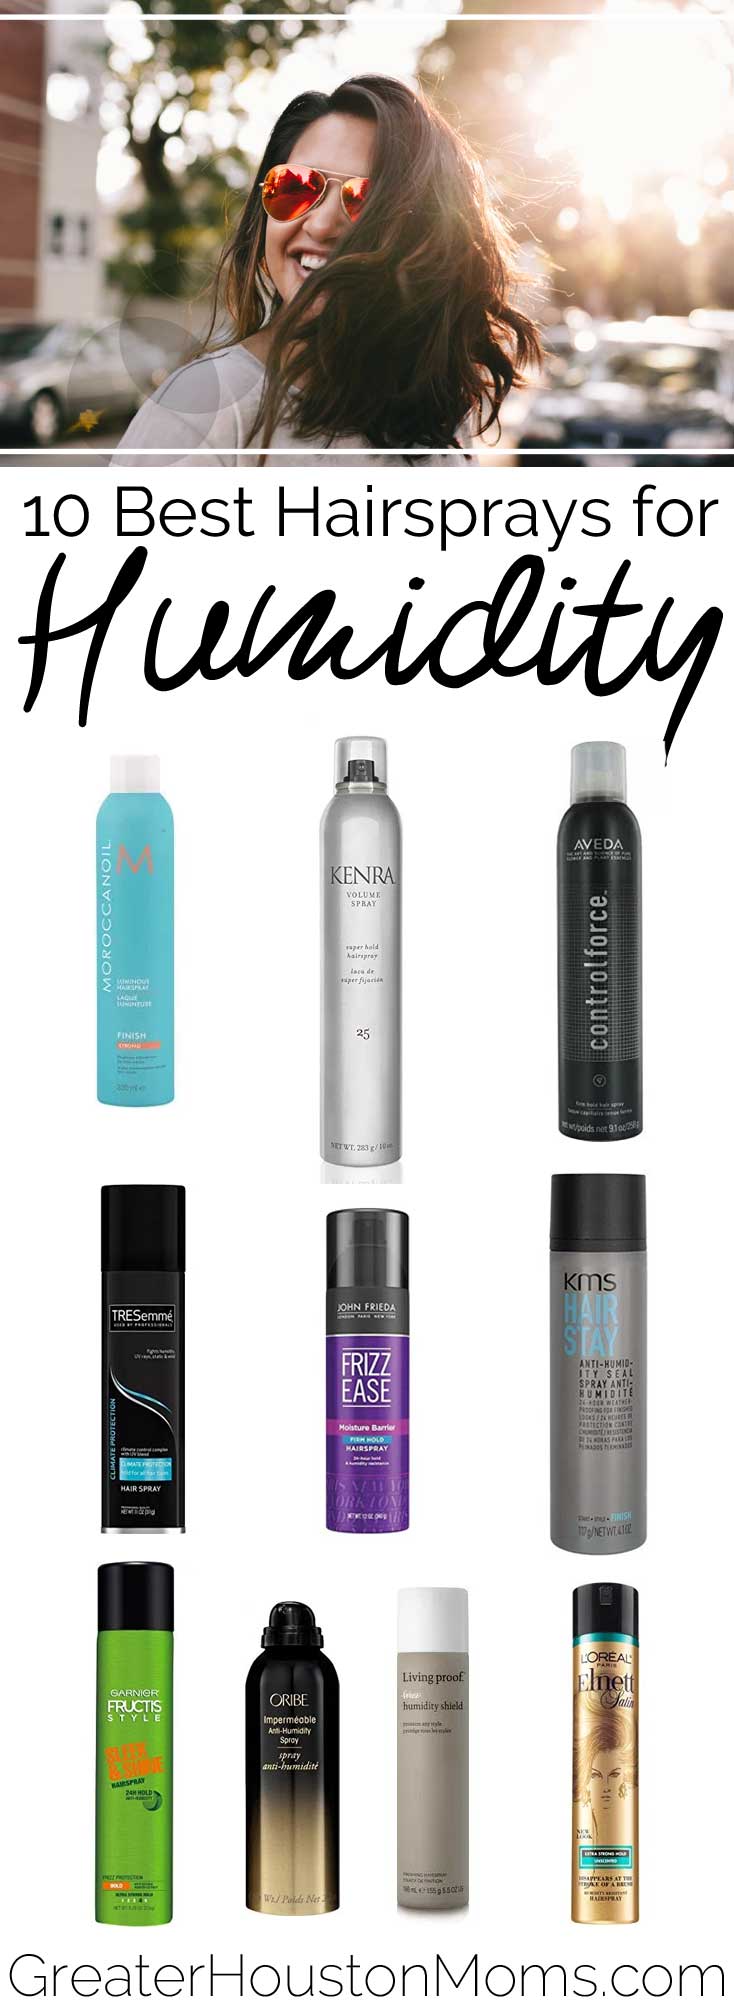 10 Best Hairsprays for Houston Humidity